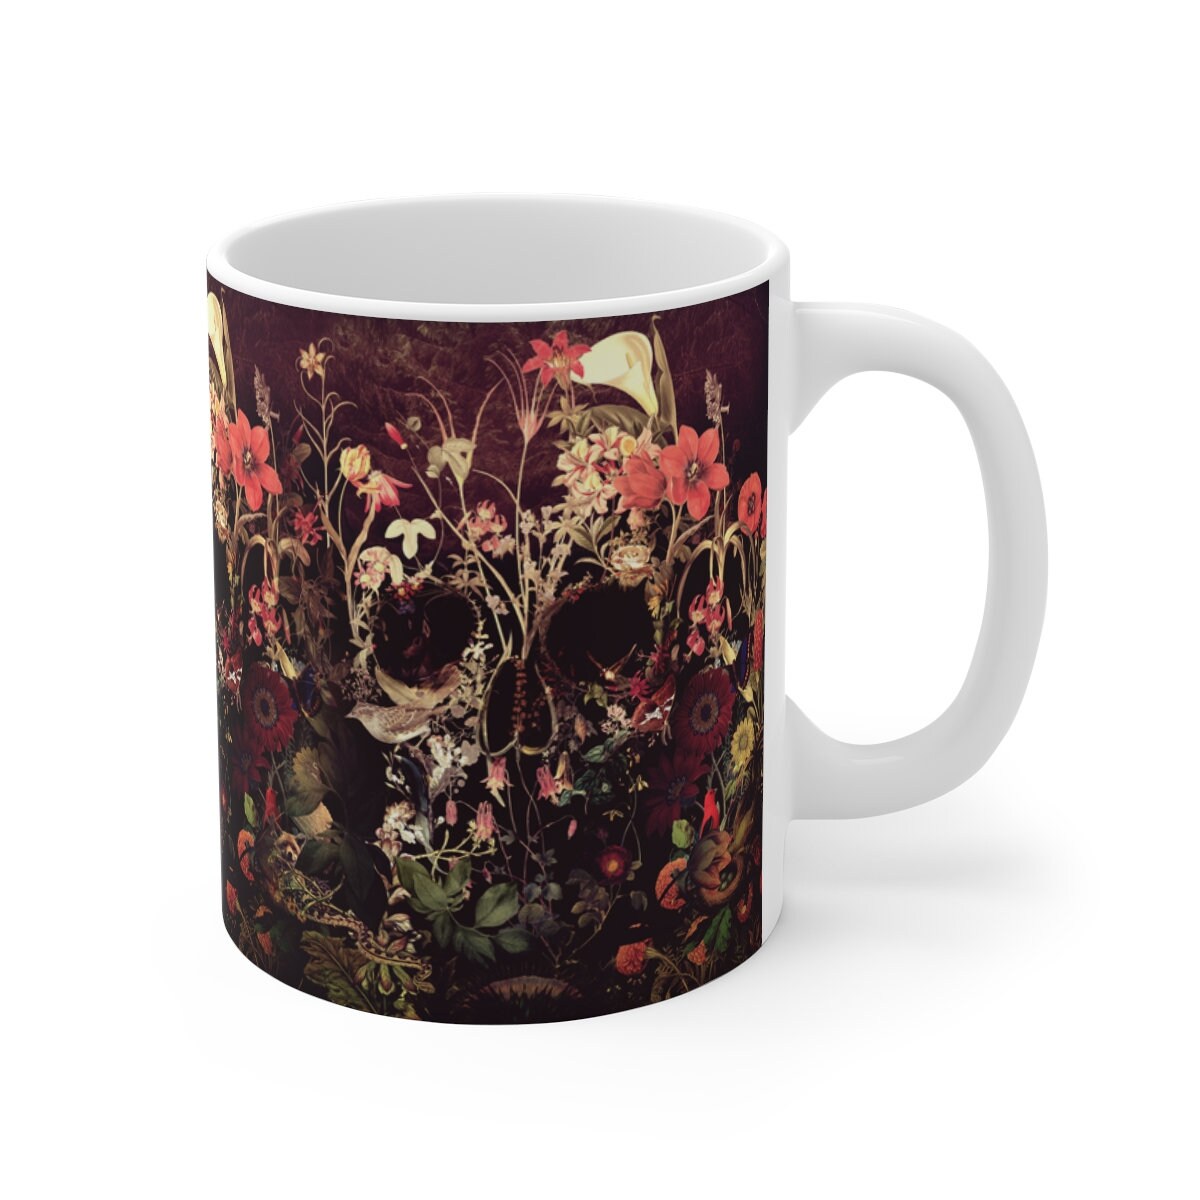 Floral Skull Mug, Flower Sugar Skull Mug Gift, Boho Skull Ceramic Coffee Mug, Gothic Skull Art Drawing Mug